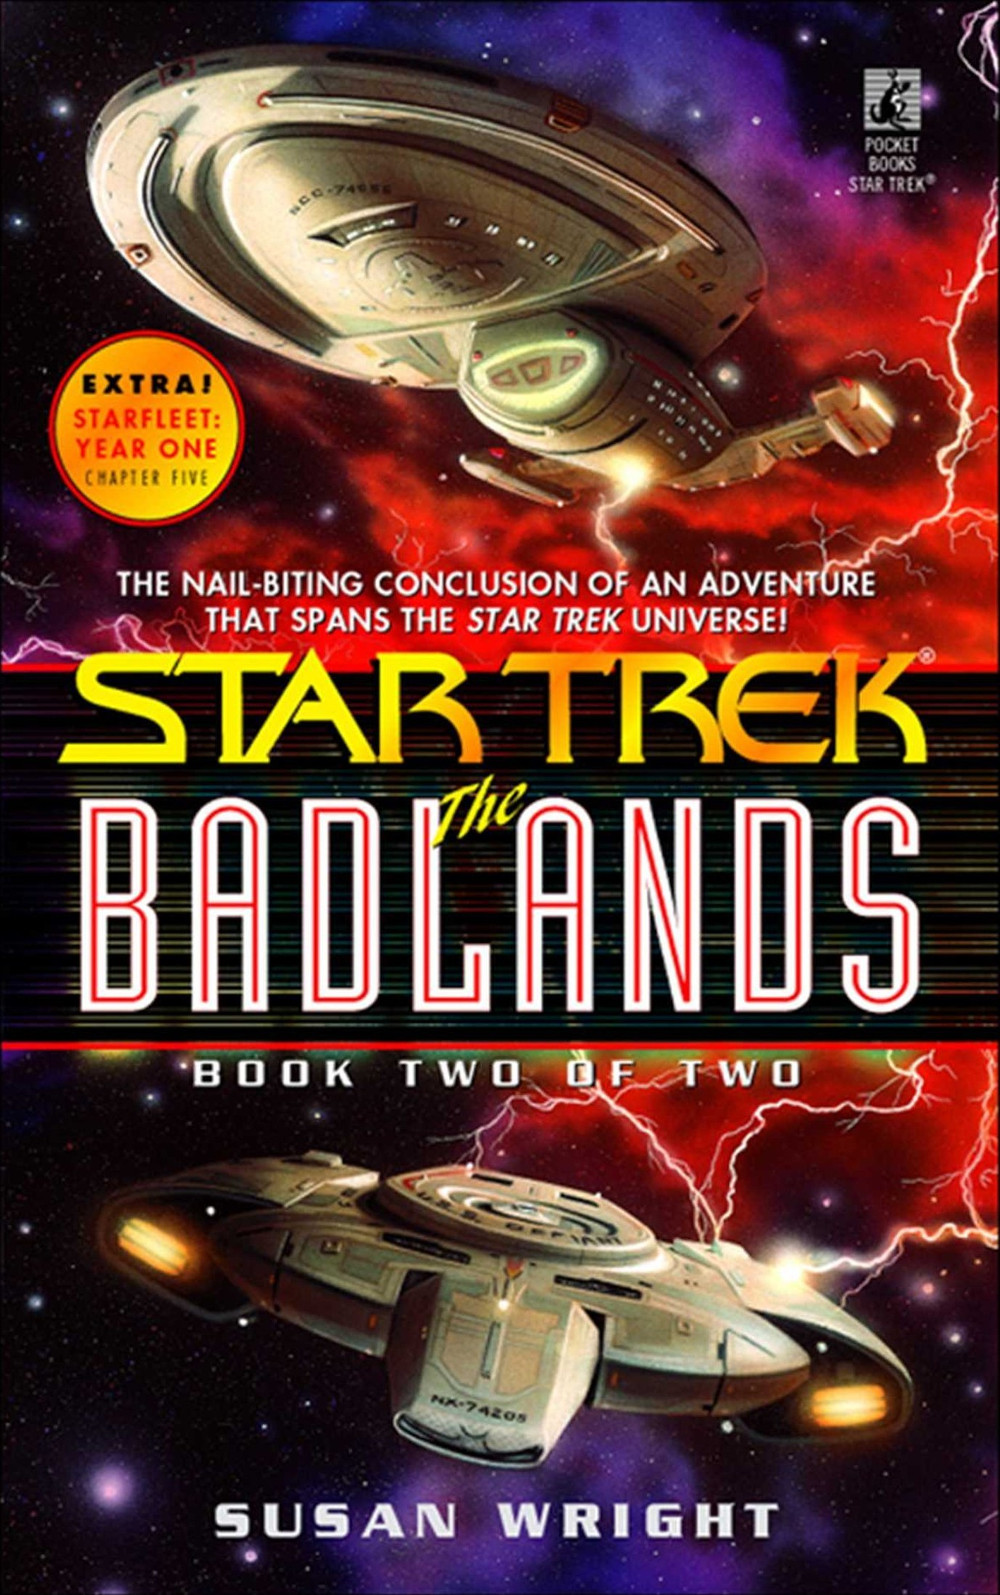 The Badlands, Book Two (Dec 1999)